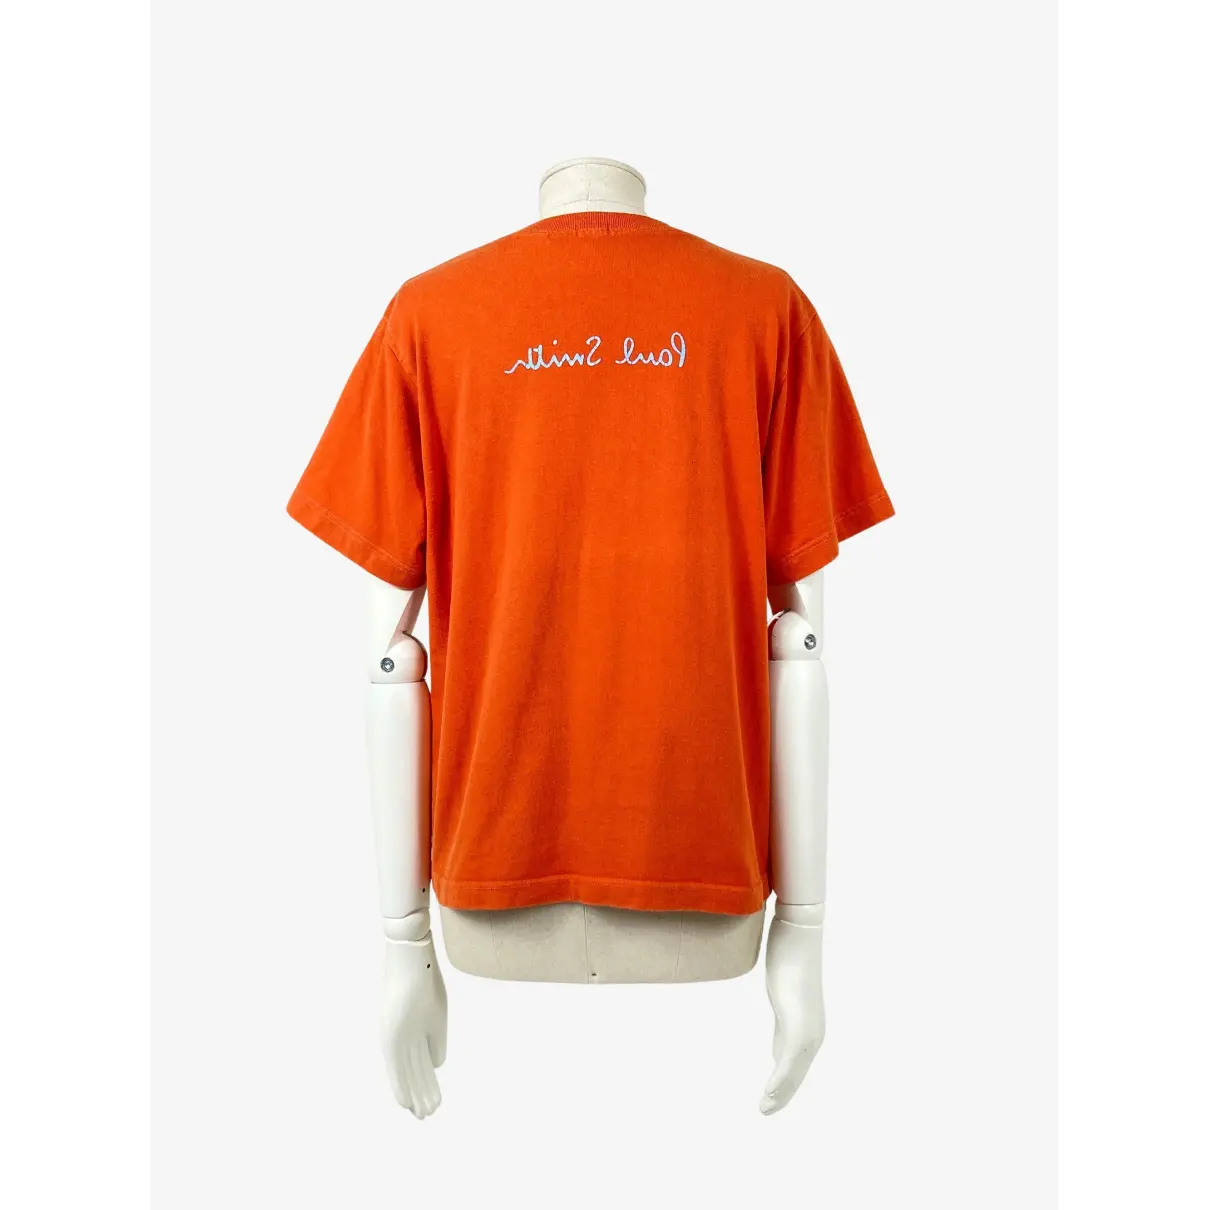 Buy Paul Smith T-shirt online